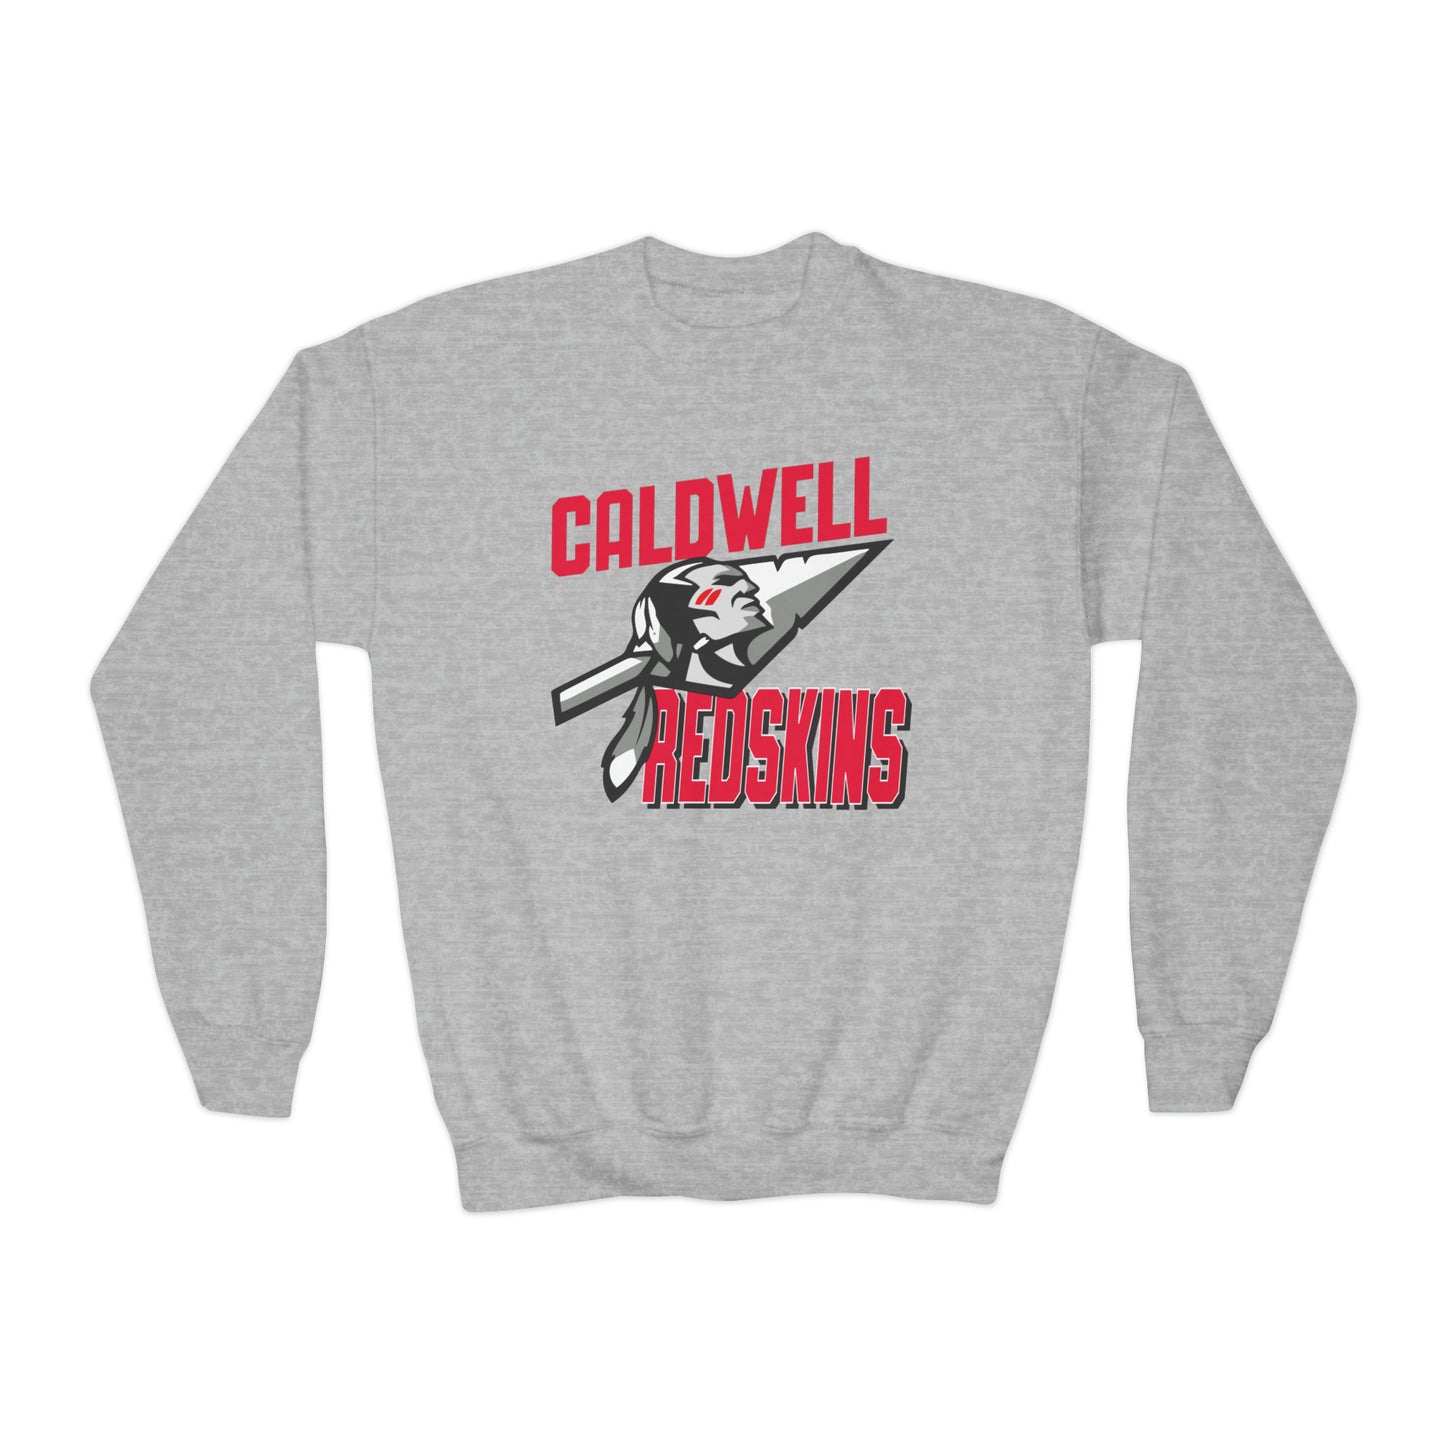 Youth Crewneck Sweatshirt - Caldwell 2